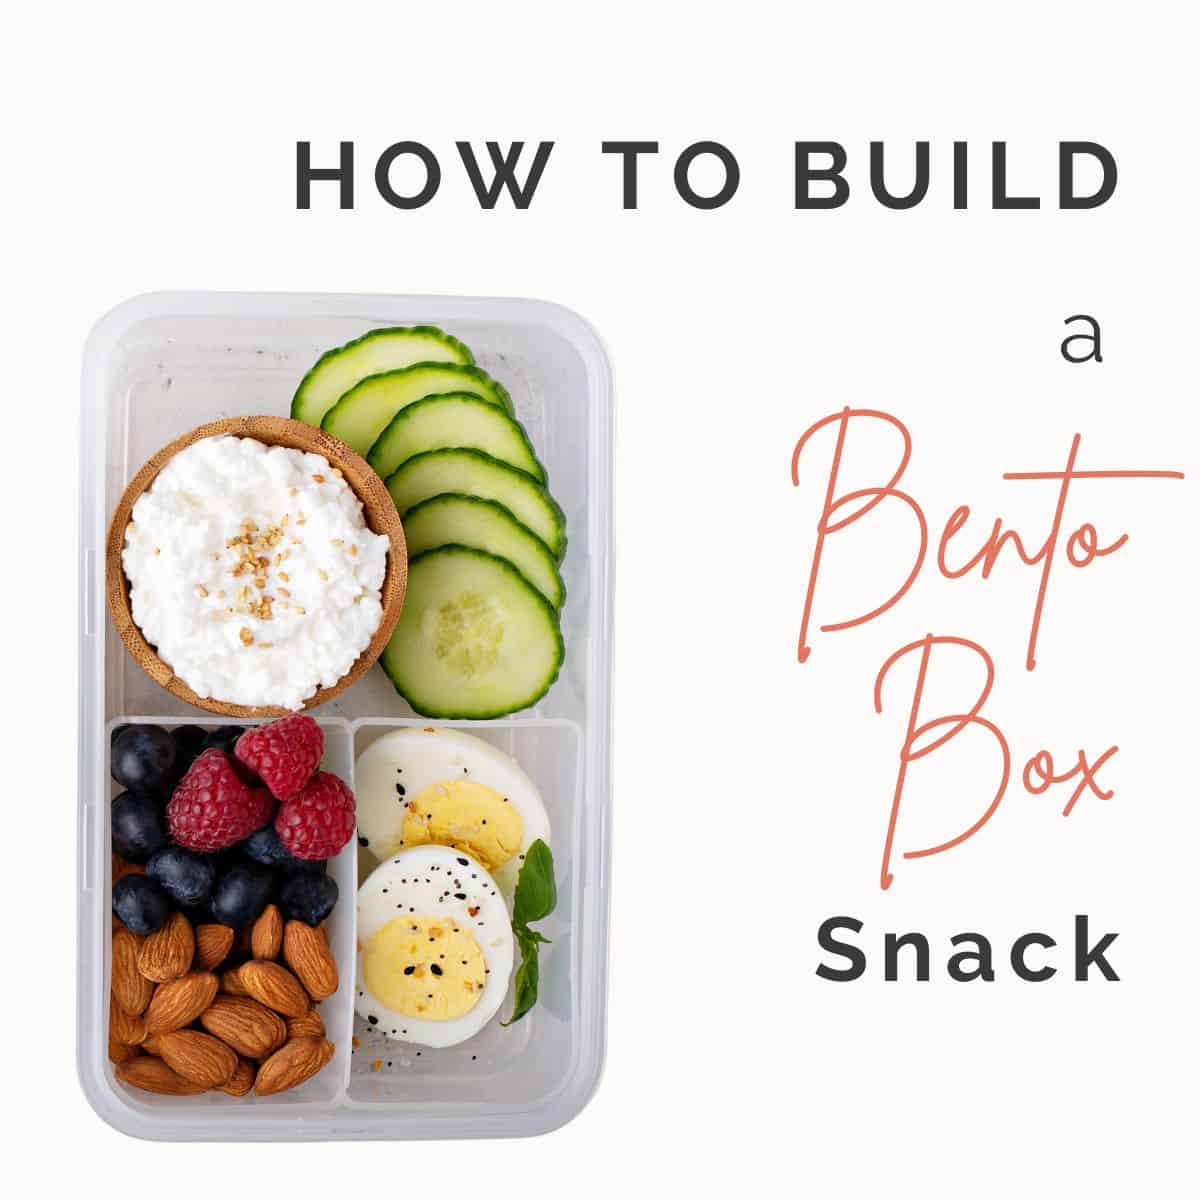 How to build a bento box snack.